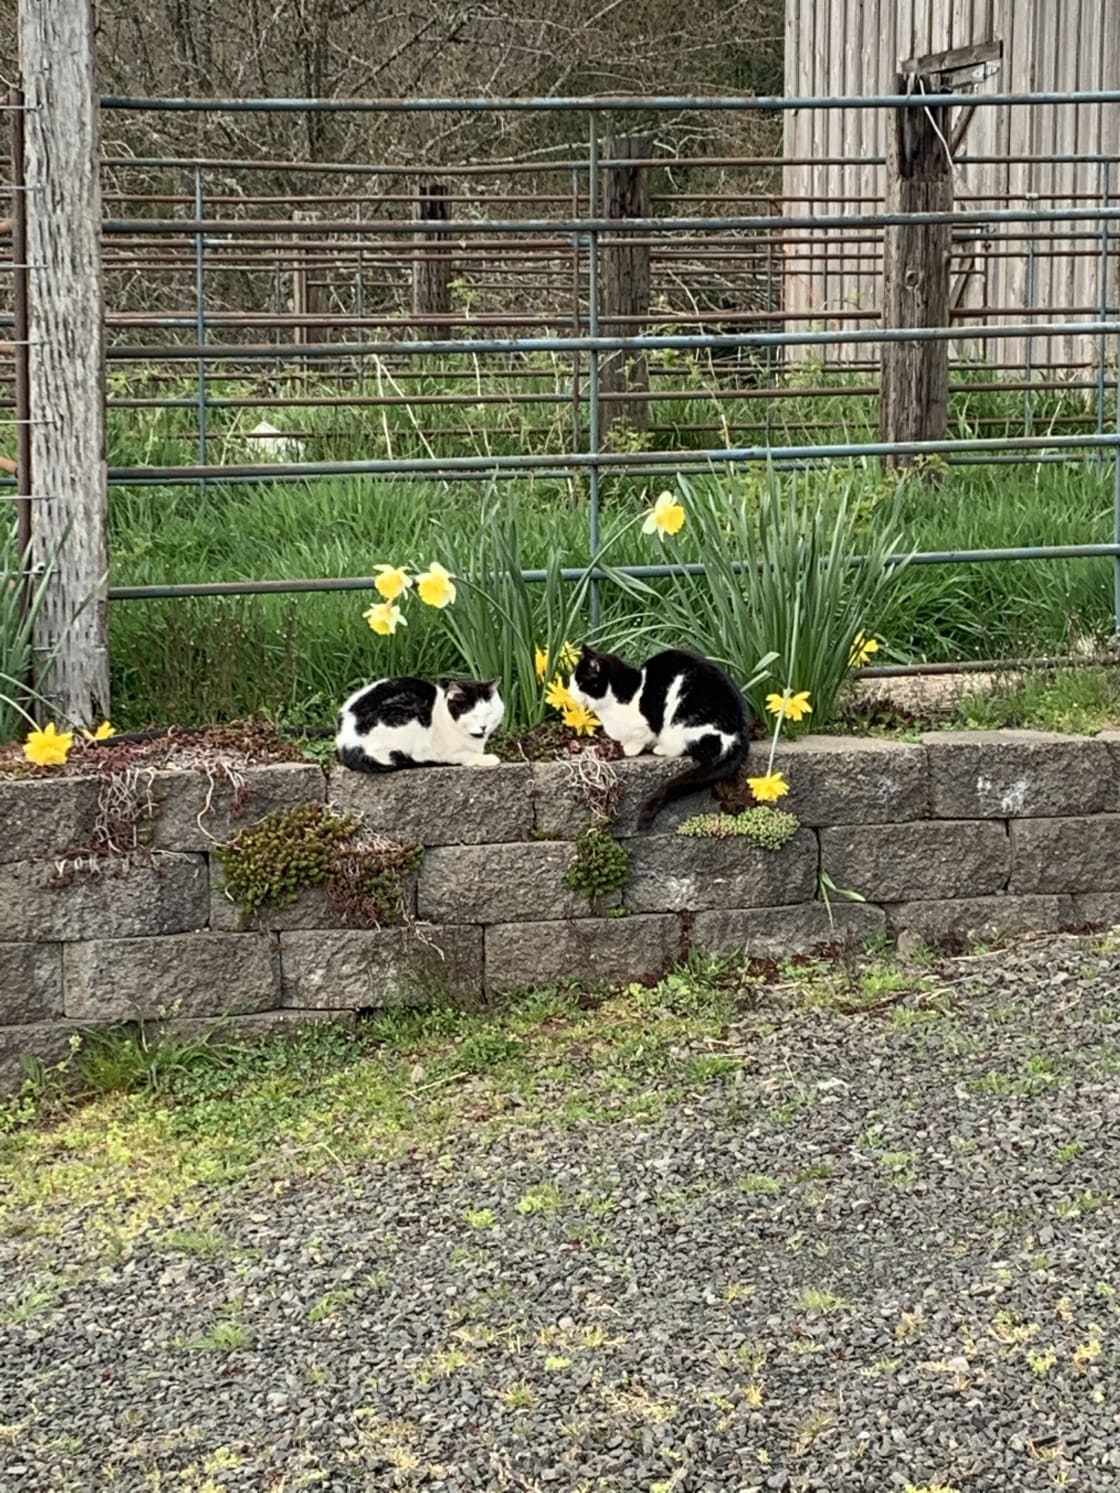 Barn cats enjoying the rock wall